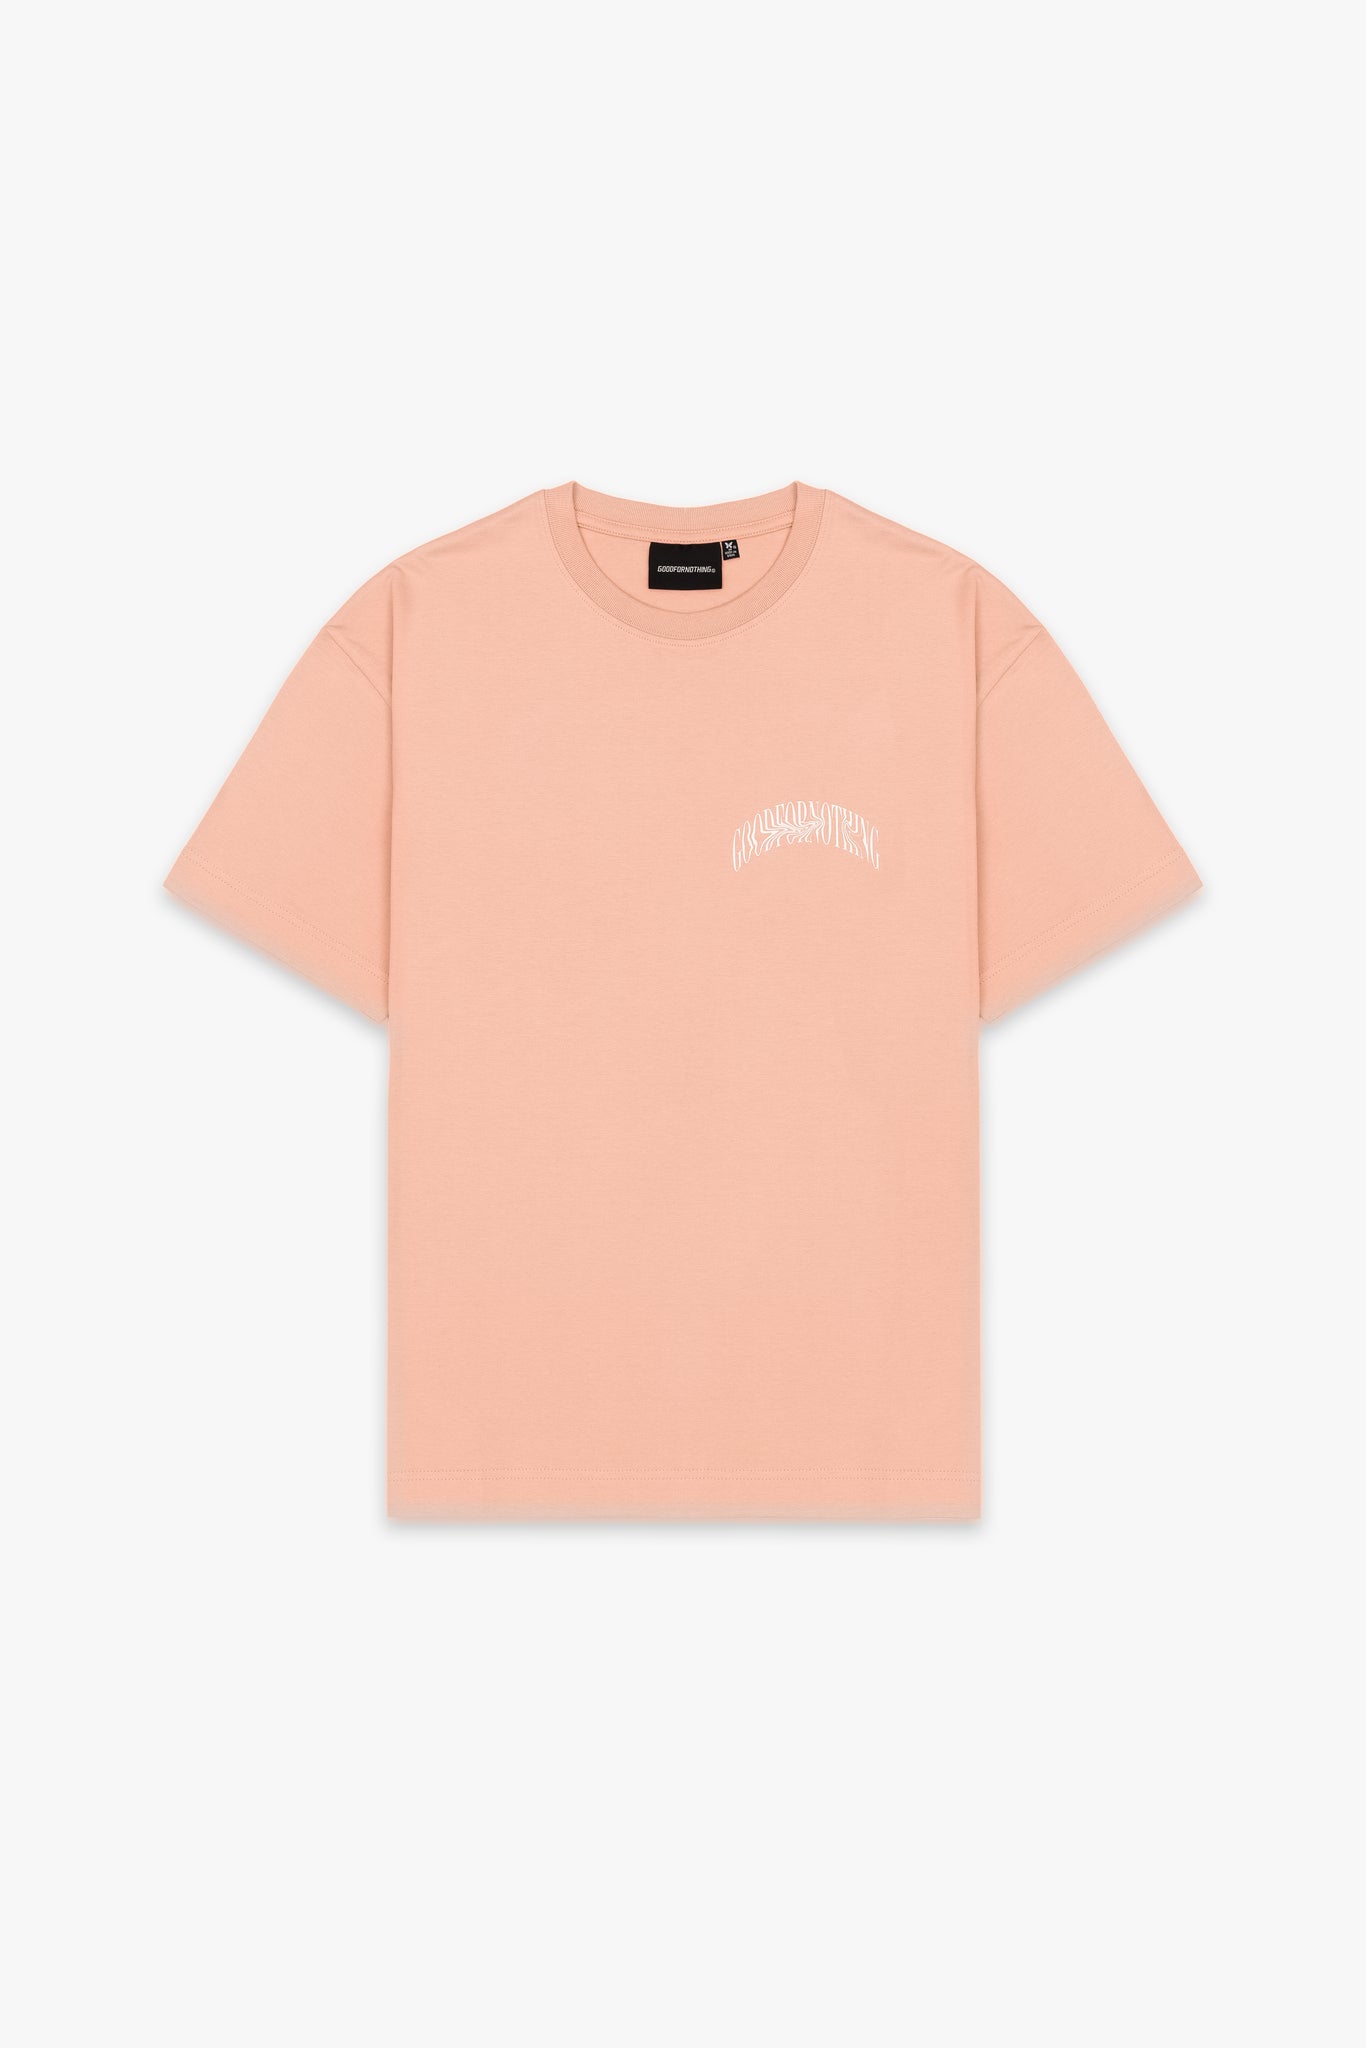 Oversized Vacation Peach T-shirt